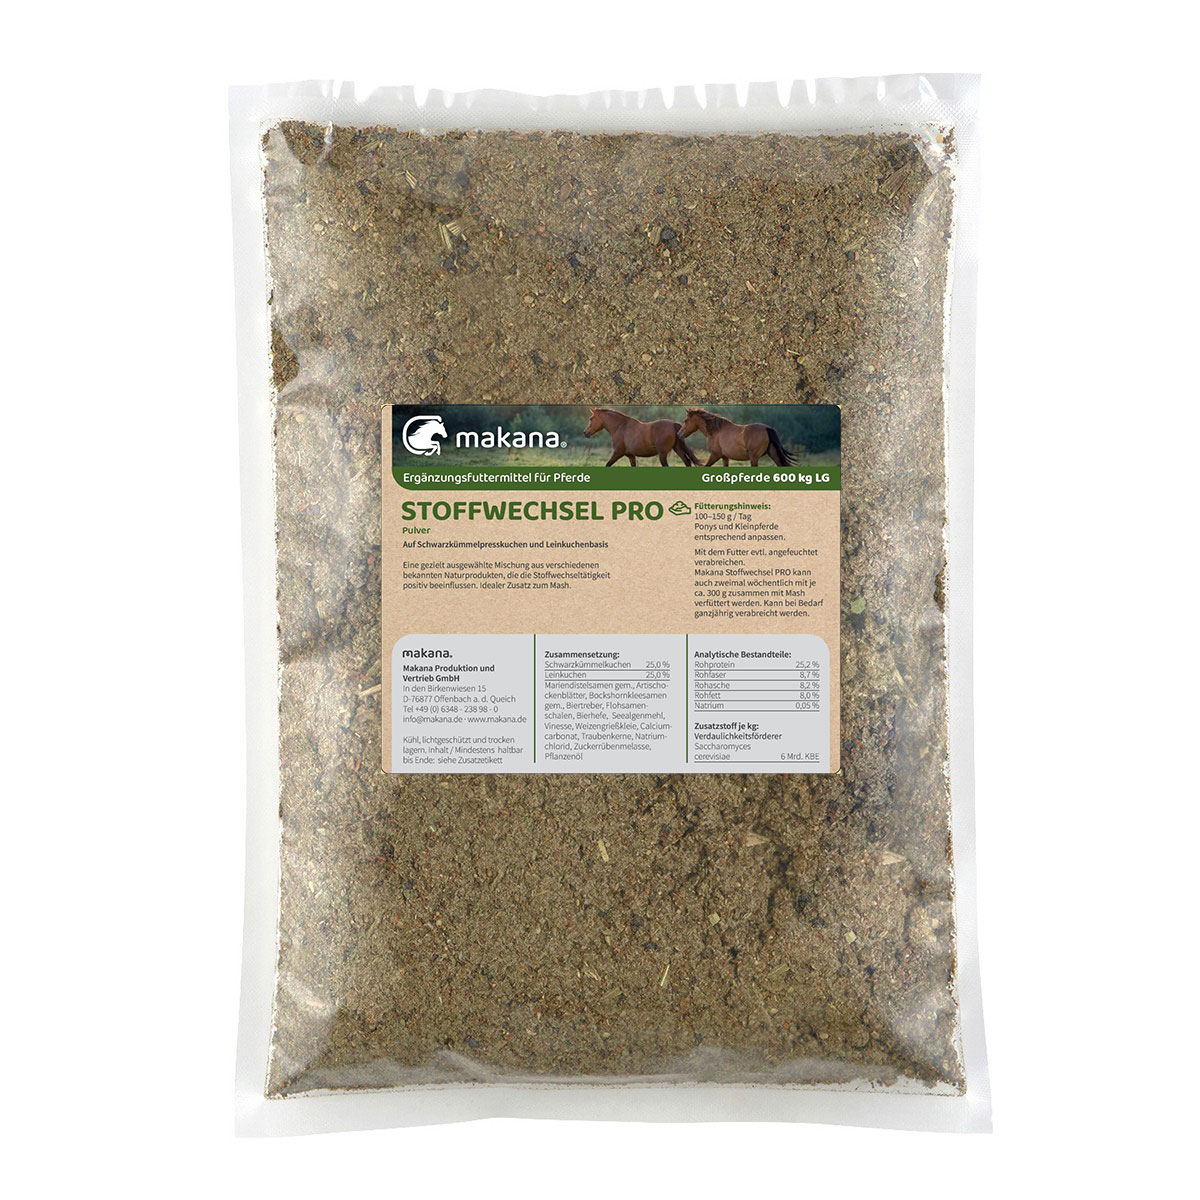 Makana Metabolism PRO Powder for animals, 1.5 kg bag